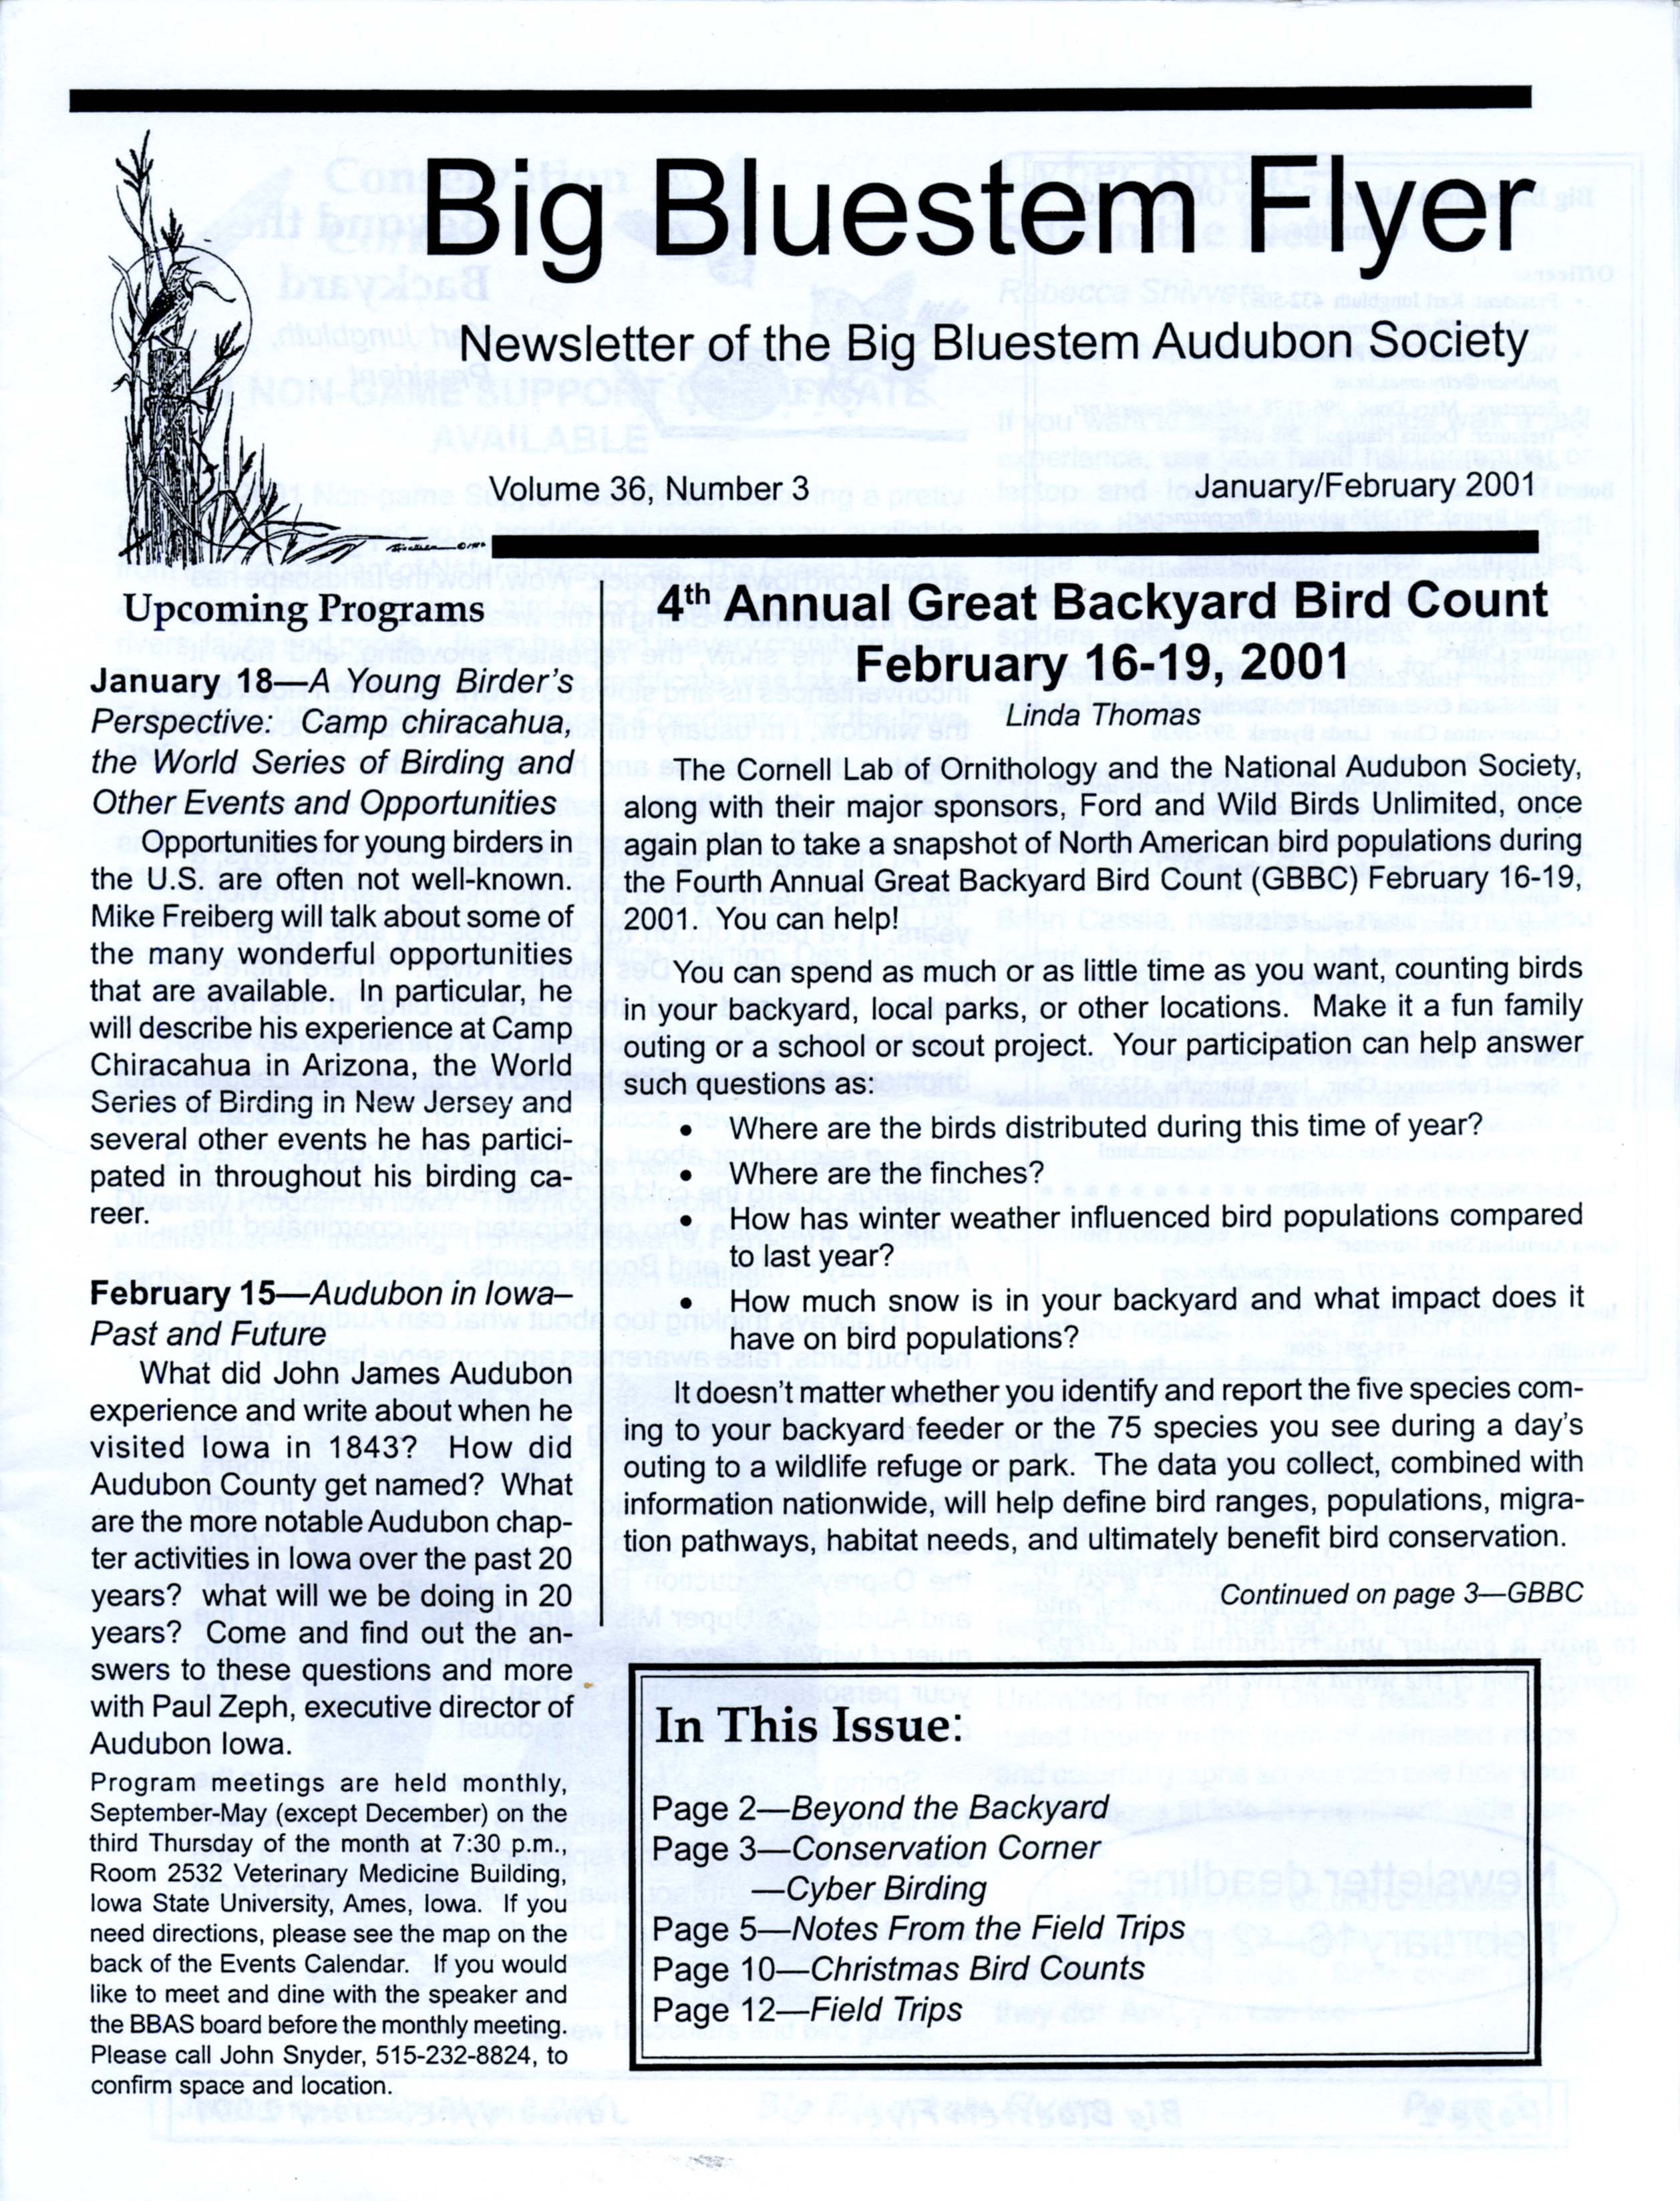 Big Bluestem Flyer, Volume 36, Number 3, January/February 2001